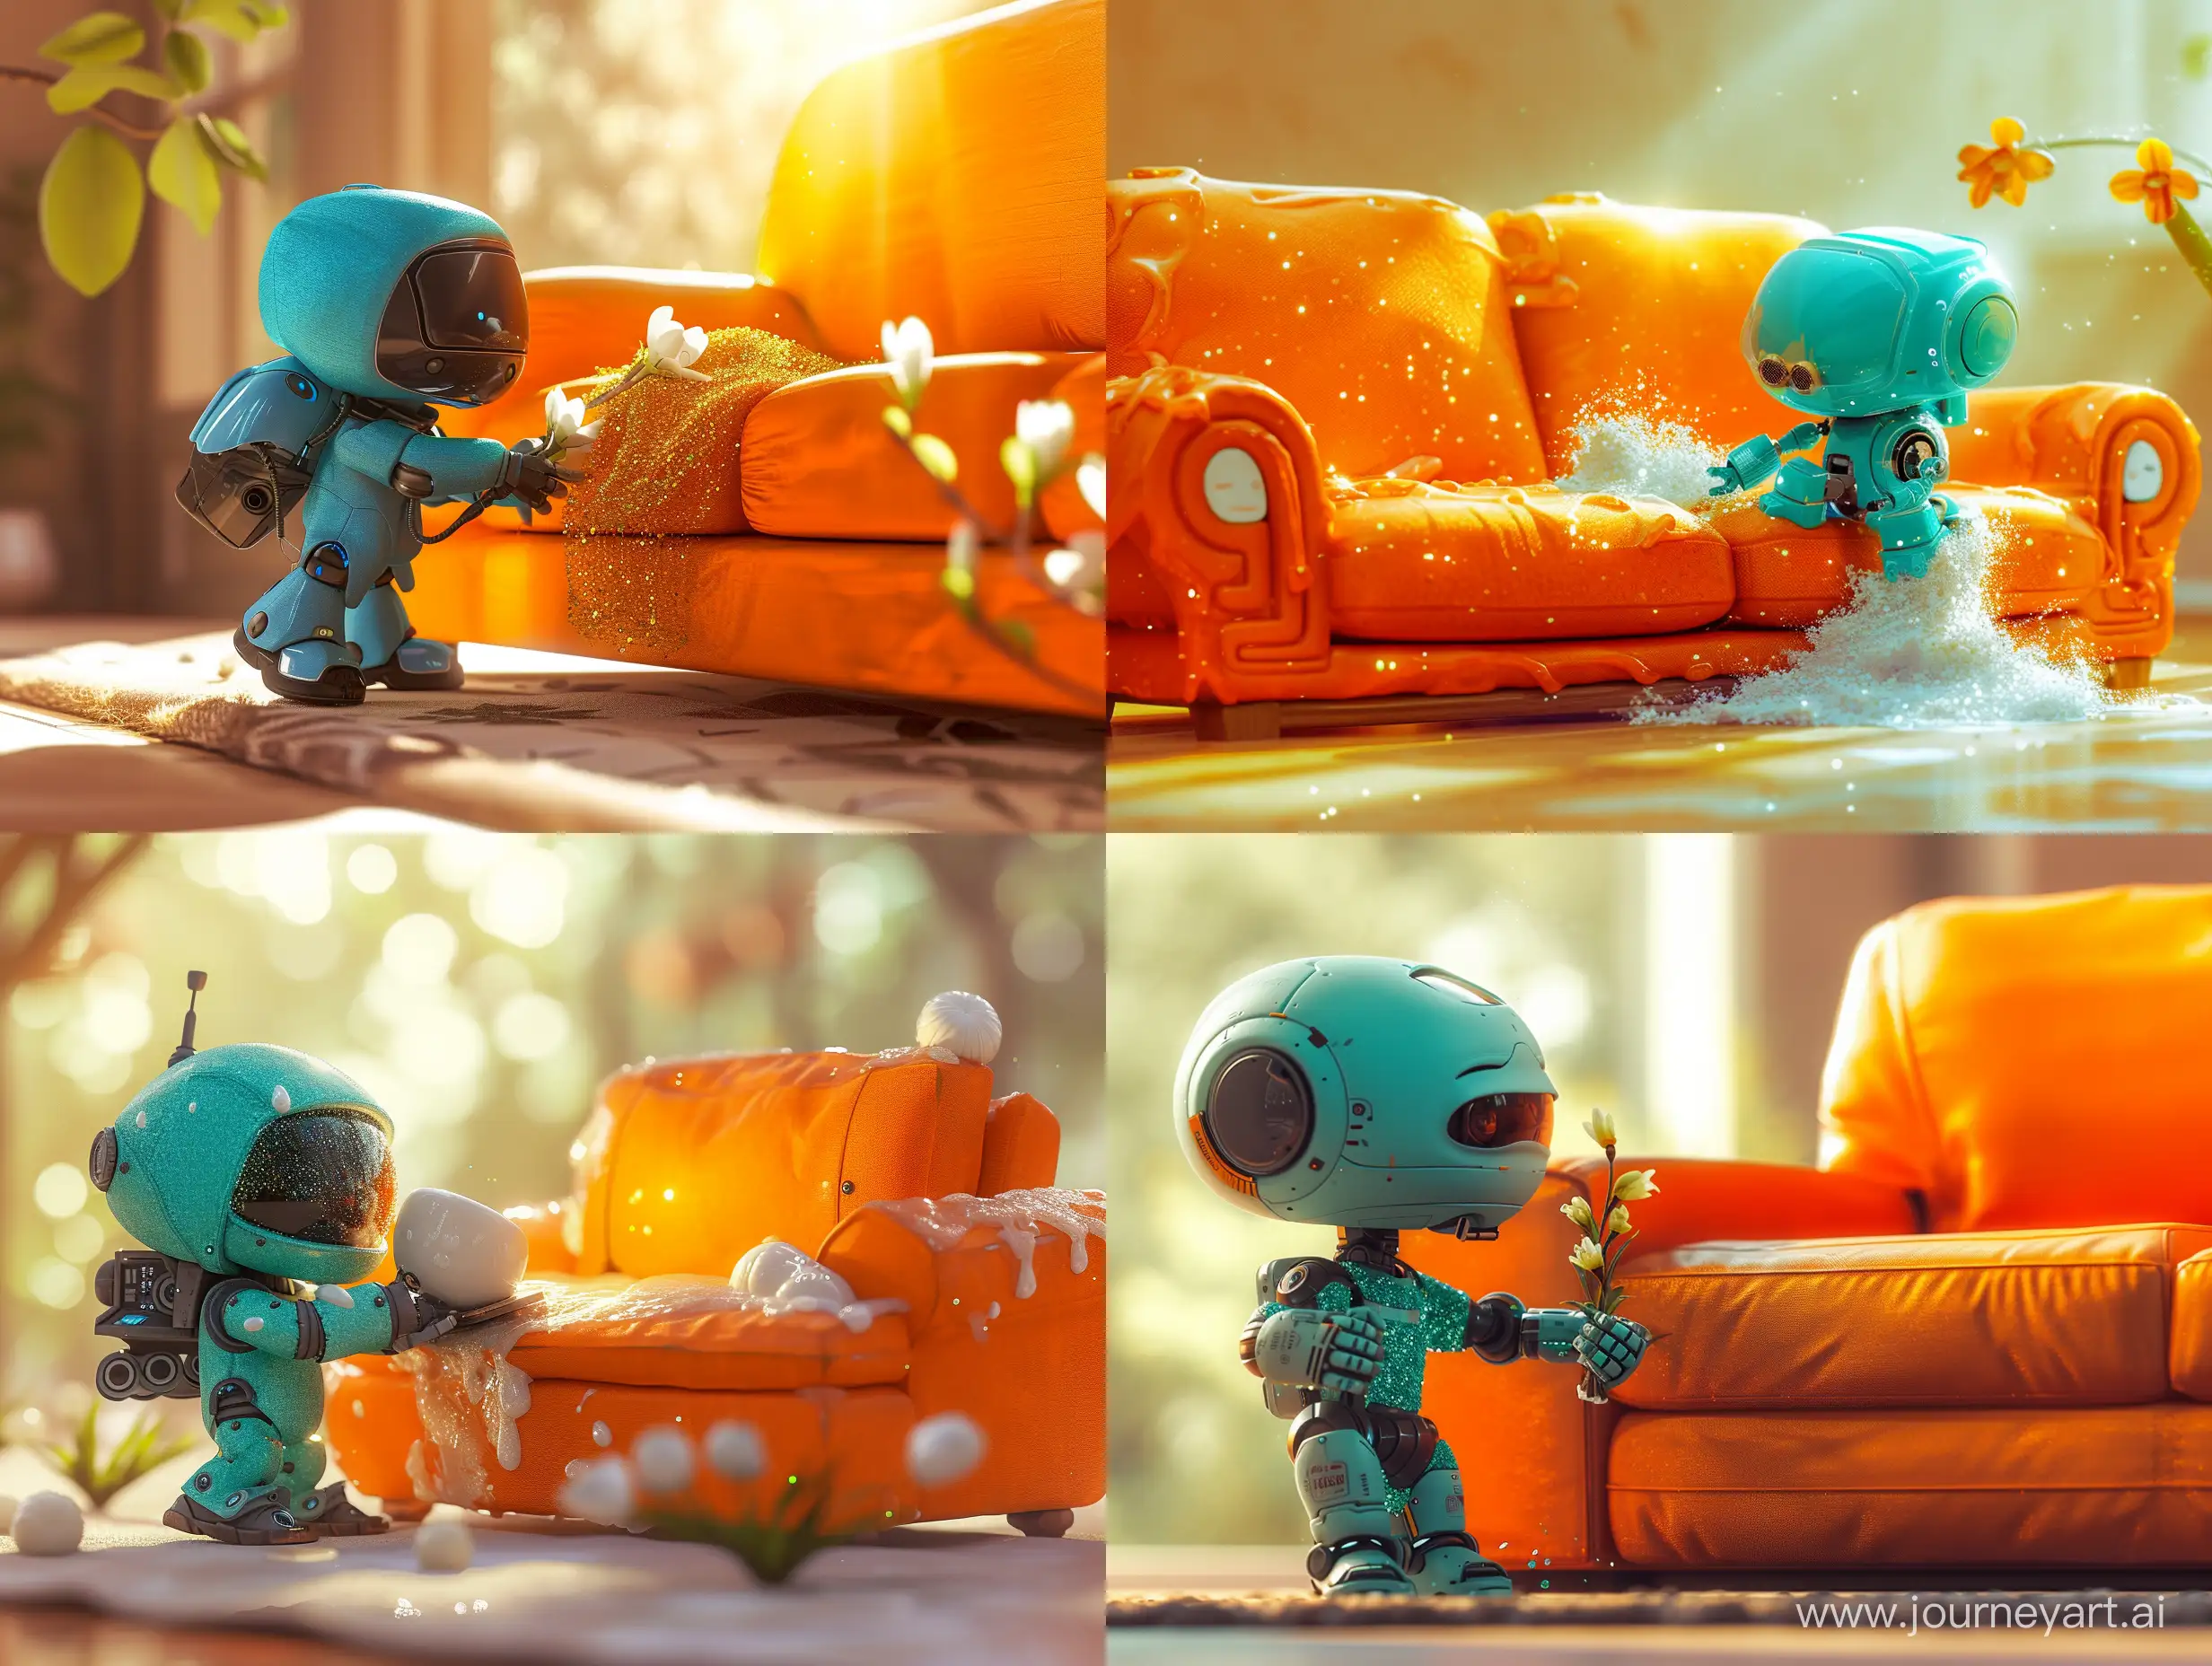 Adorable-Turquoise-Jumpsuit-Robot-Cleaning-Orange-Sofa-Hyper-Realistic-3D-Art